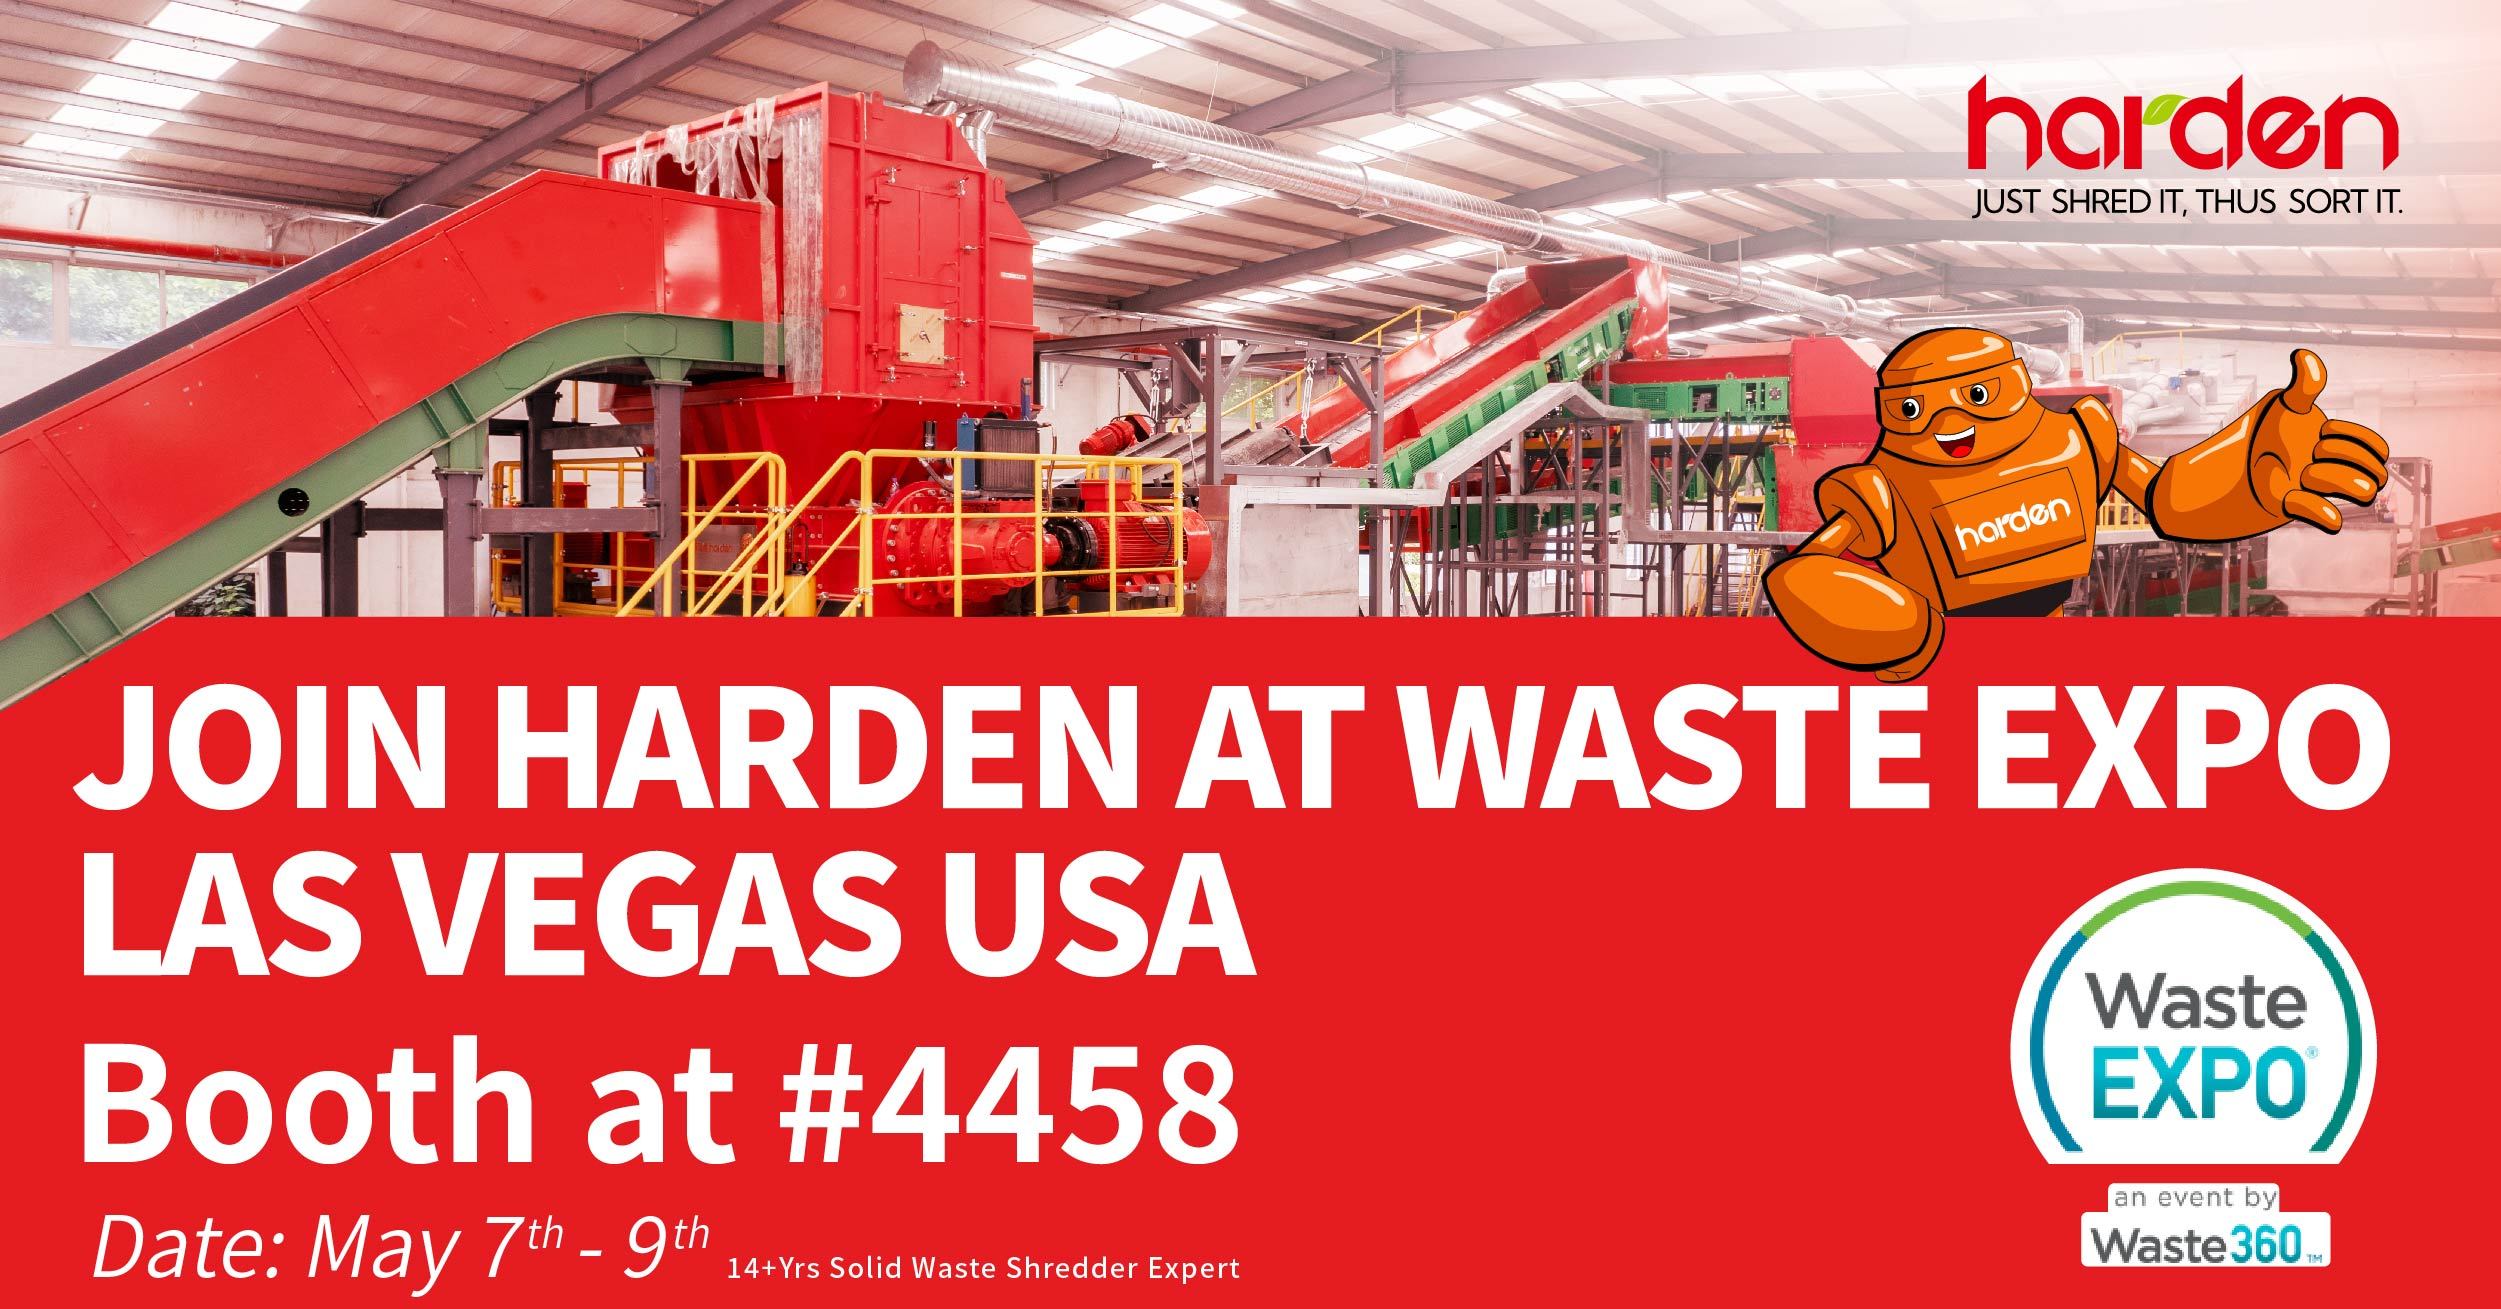 Join HARDEN at Waste Expo, Las Vegas